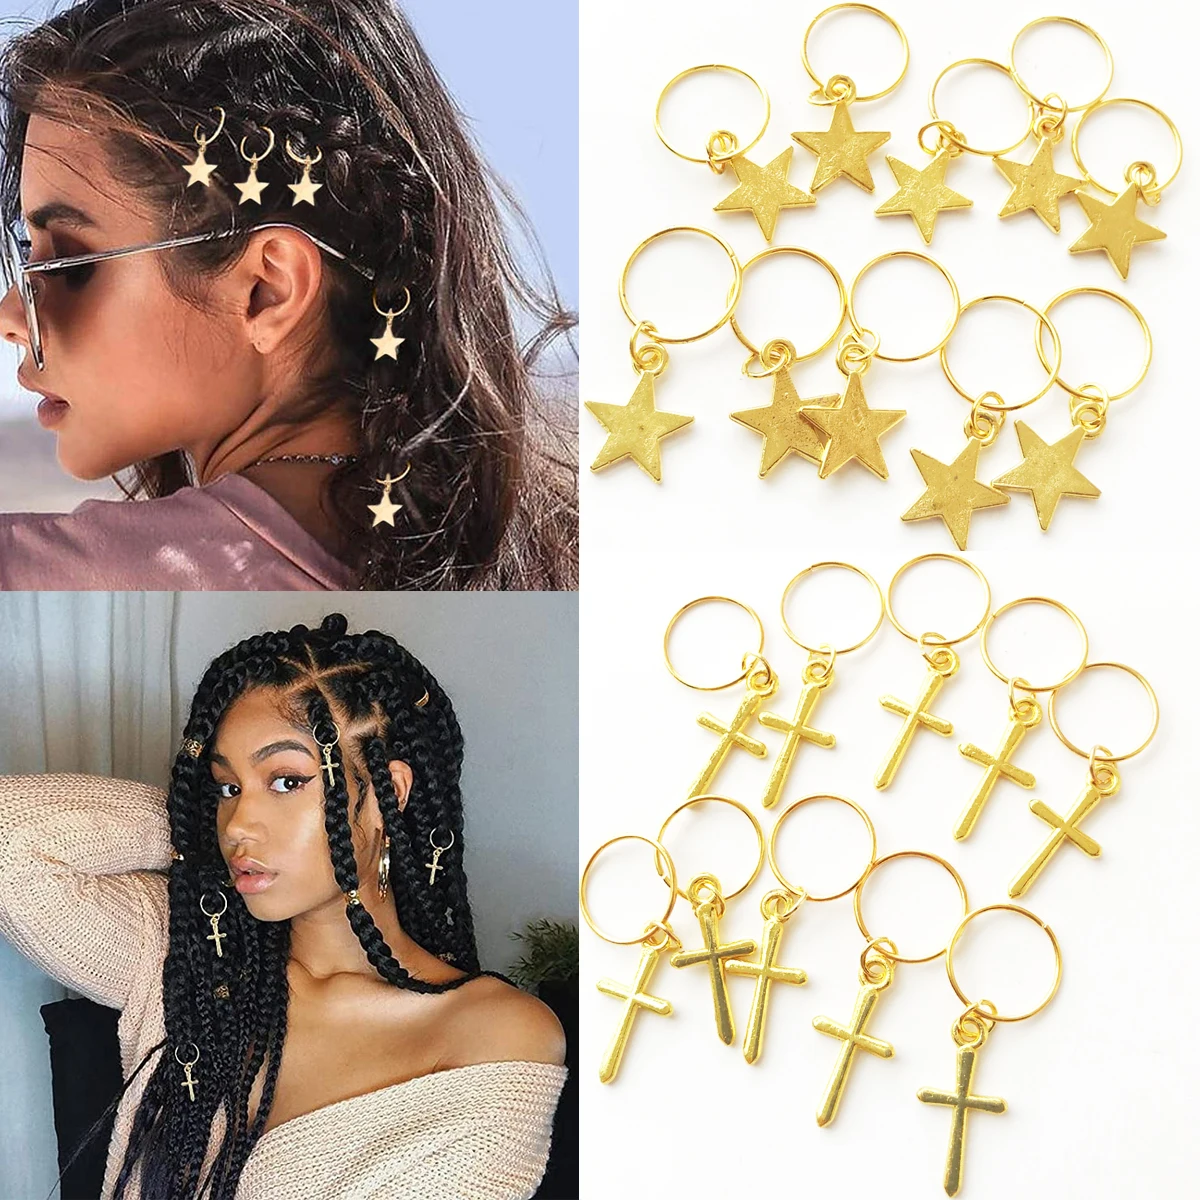 

5PCS Gold Dreadlock Hair Jewelry Rings Accessories Metal Cuffs Decorations Star Leaves Pendants Women Braid Clips